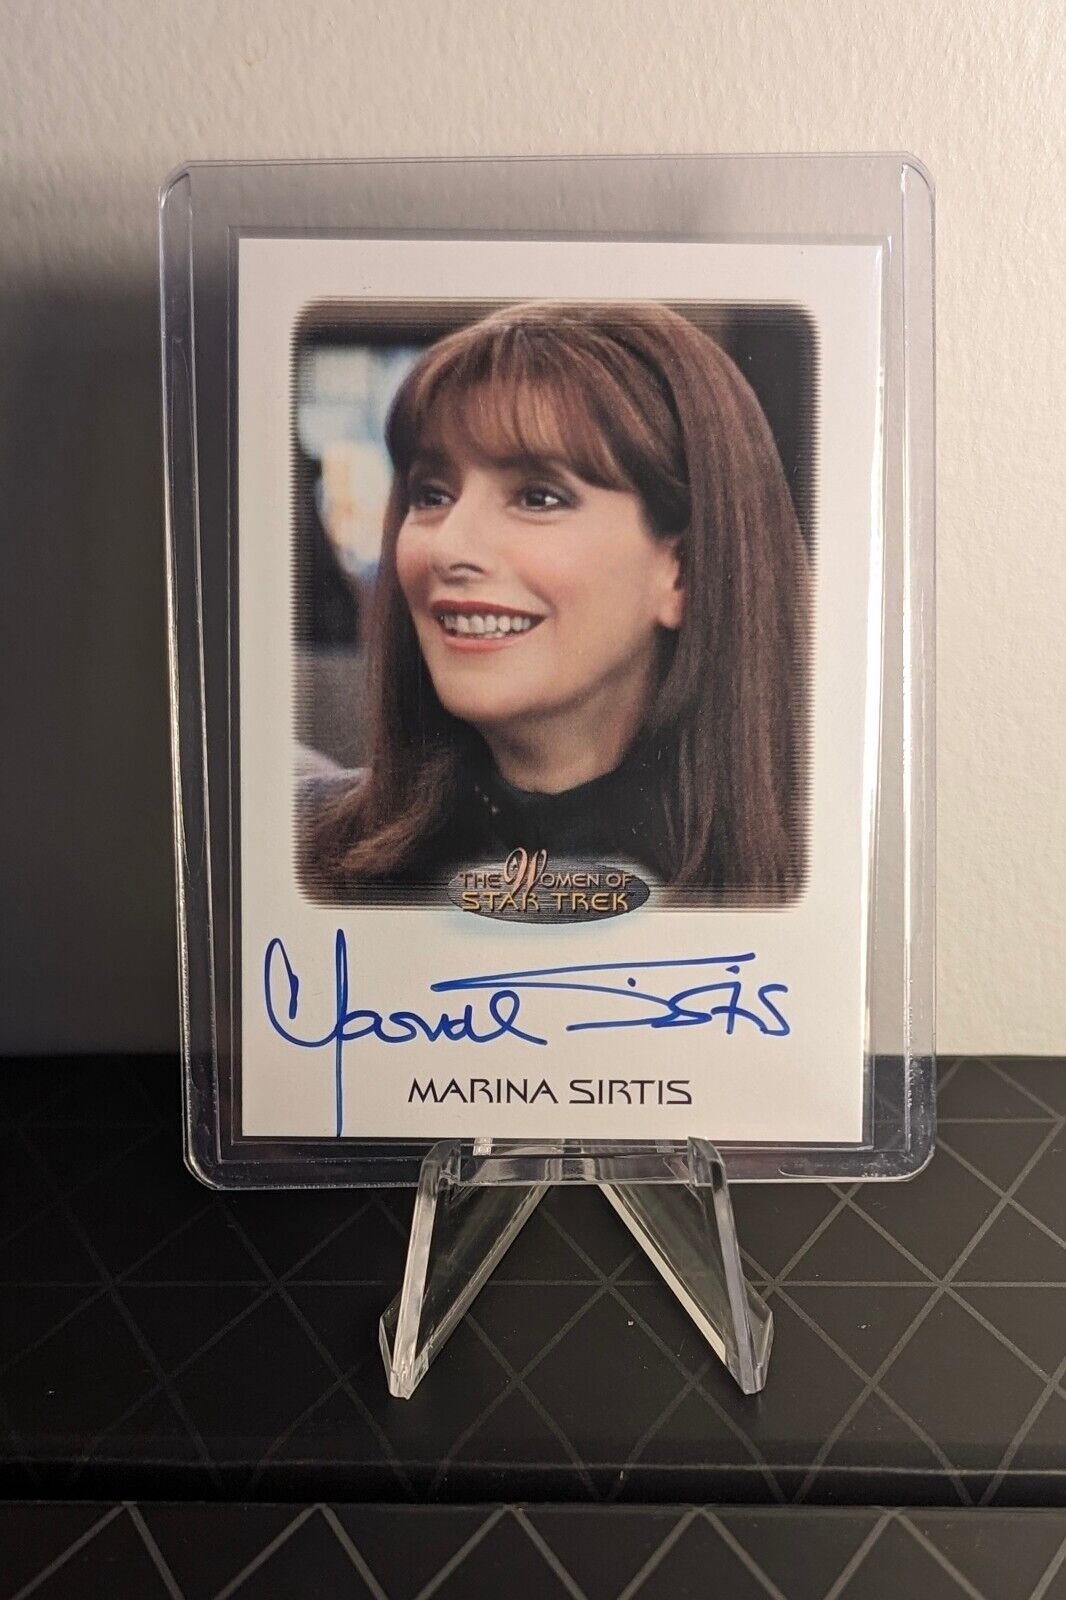 The Women of Star Trek 2021 Marina Sirtis as Deanna Troi Nemesis Autograph Card